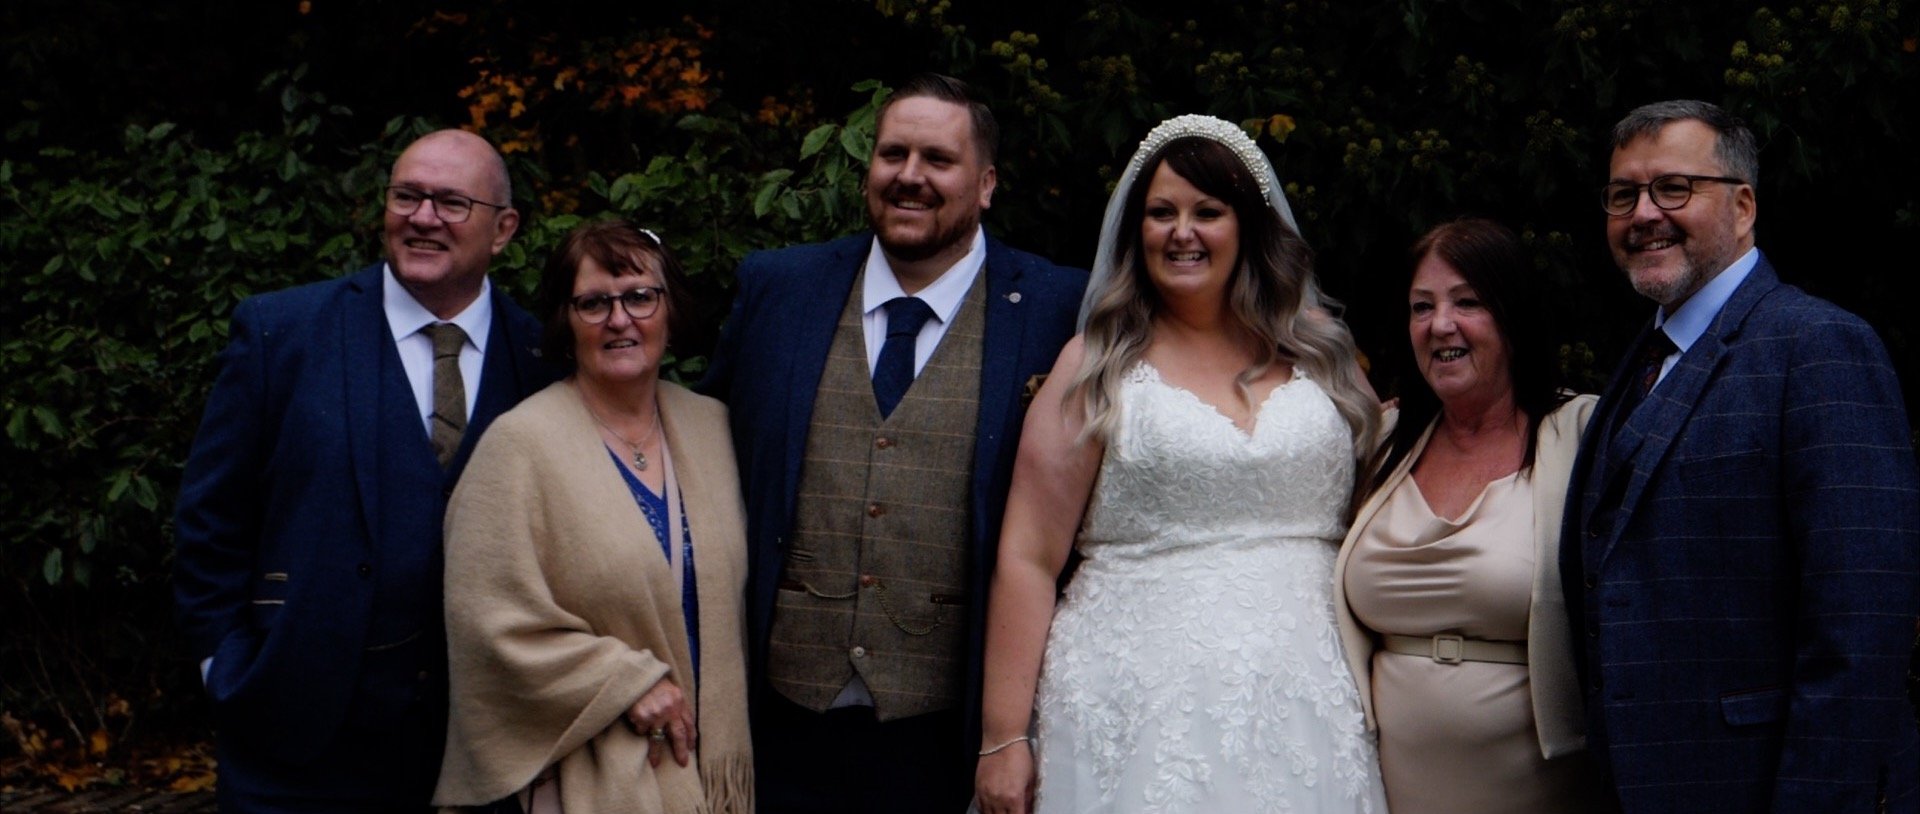 Family photo at Rayleigh windmill Essex Wedding videos.jpg